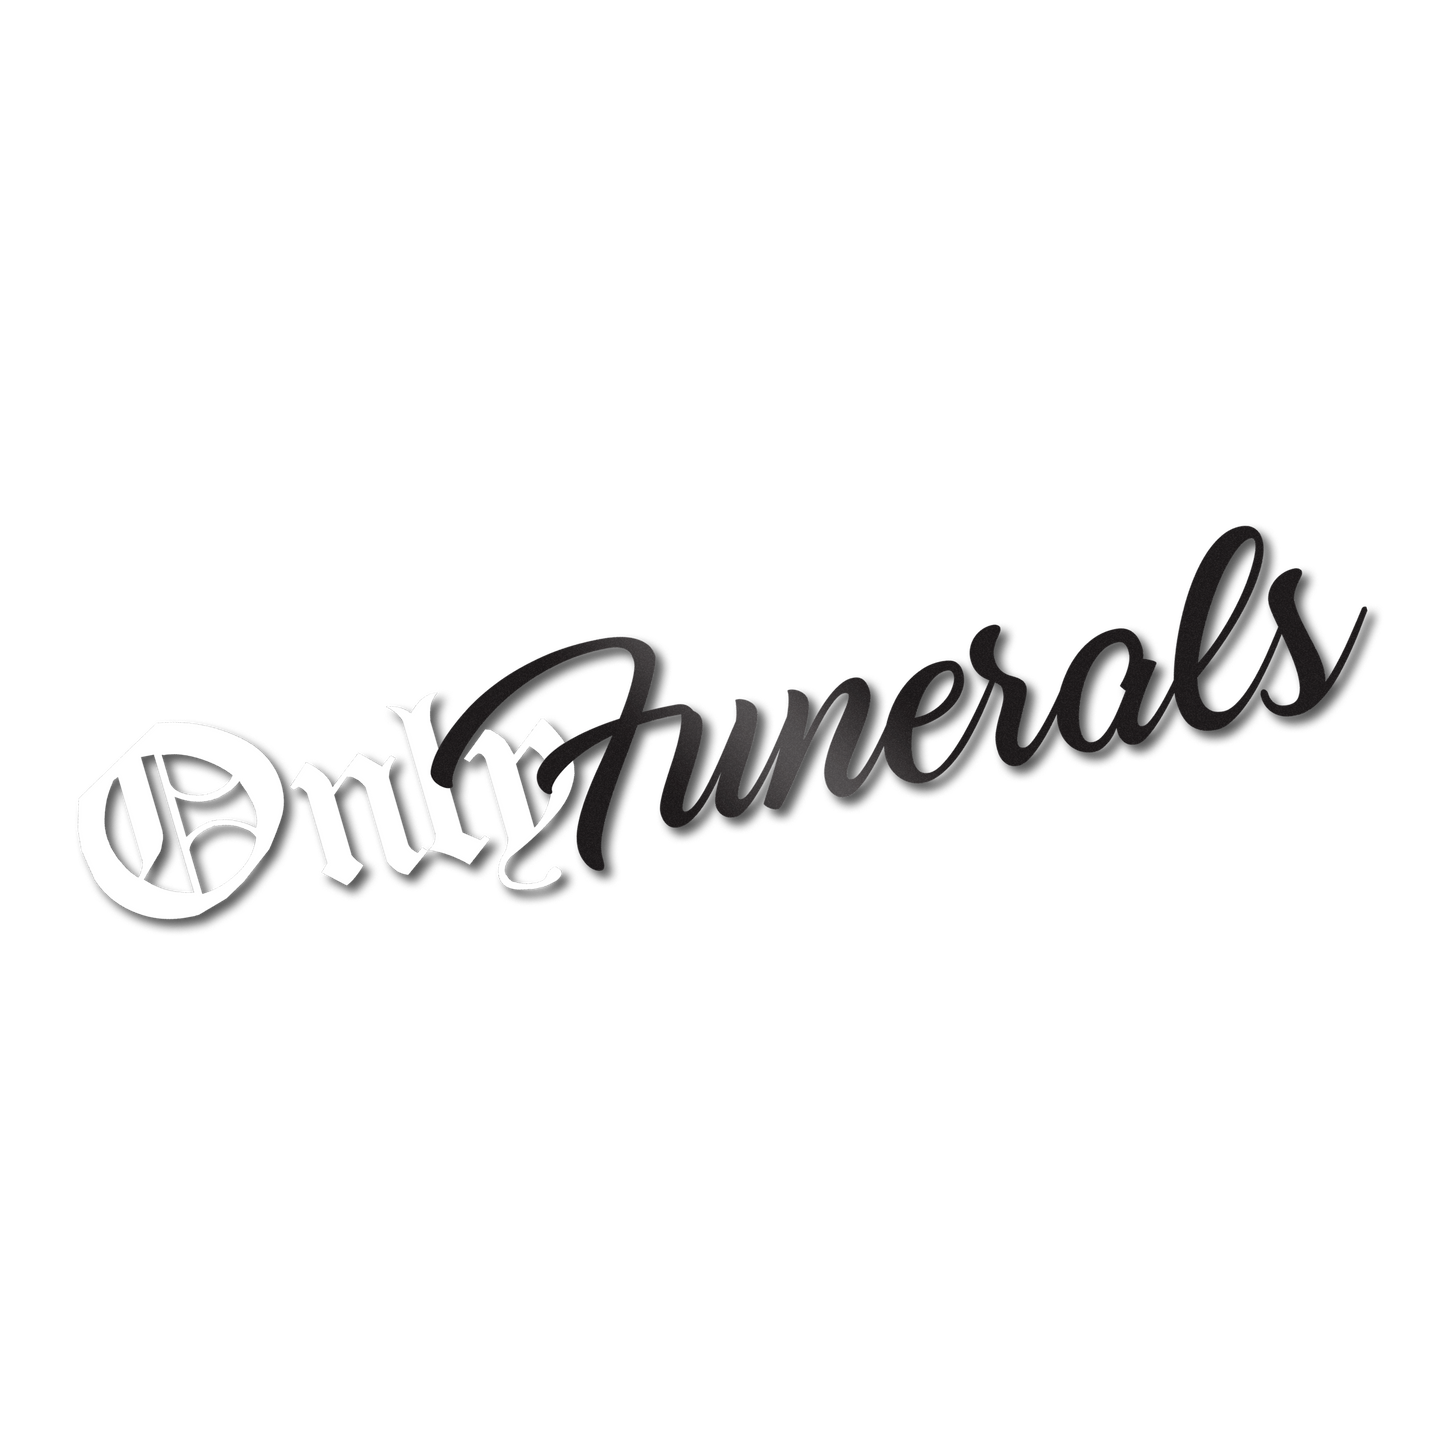 OnlyFunerals Decal - Just Black